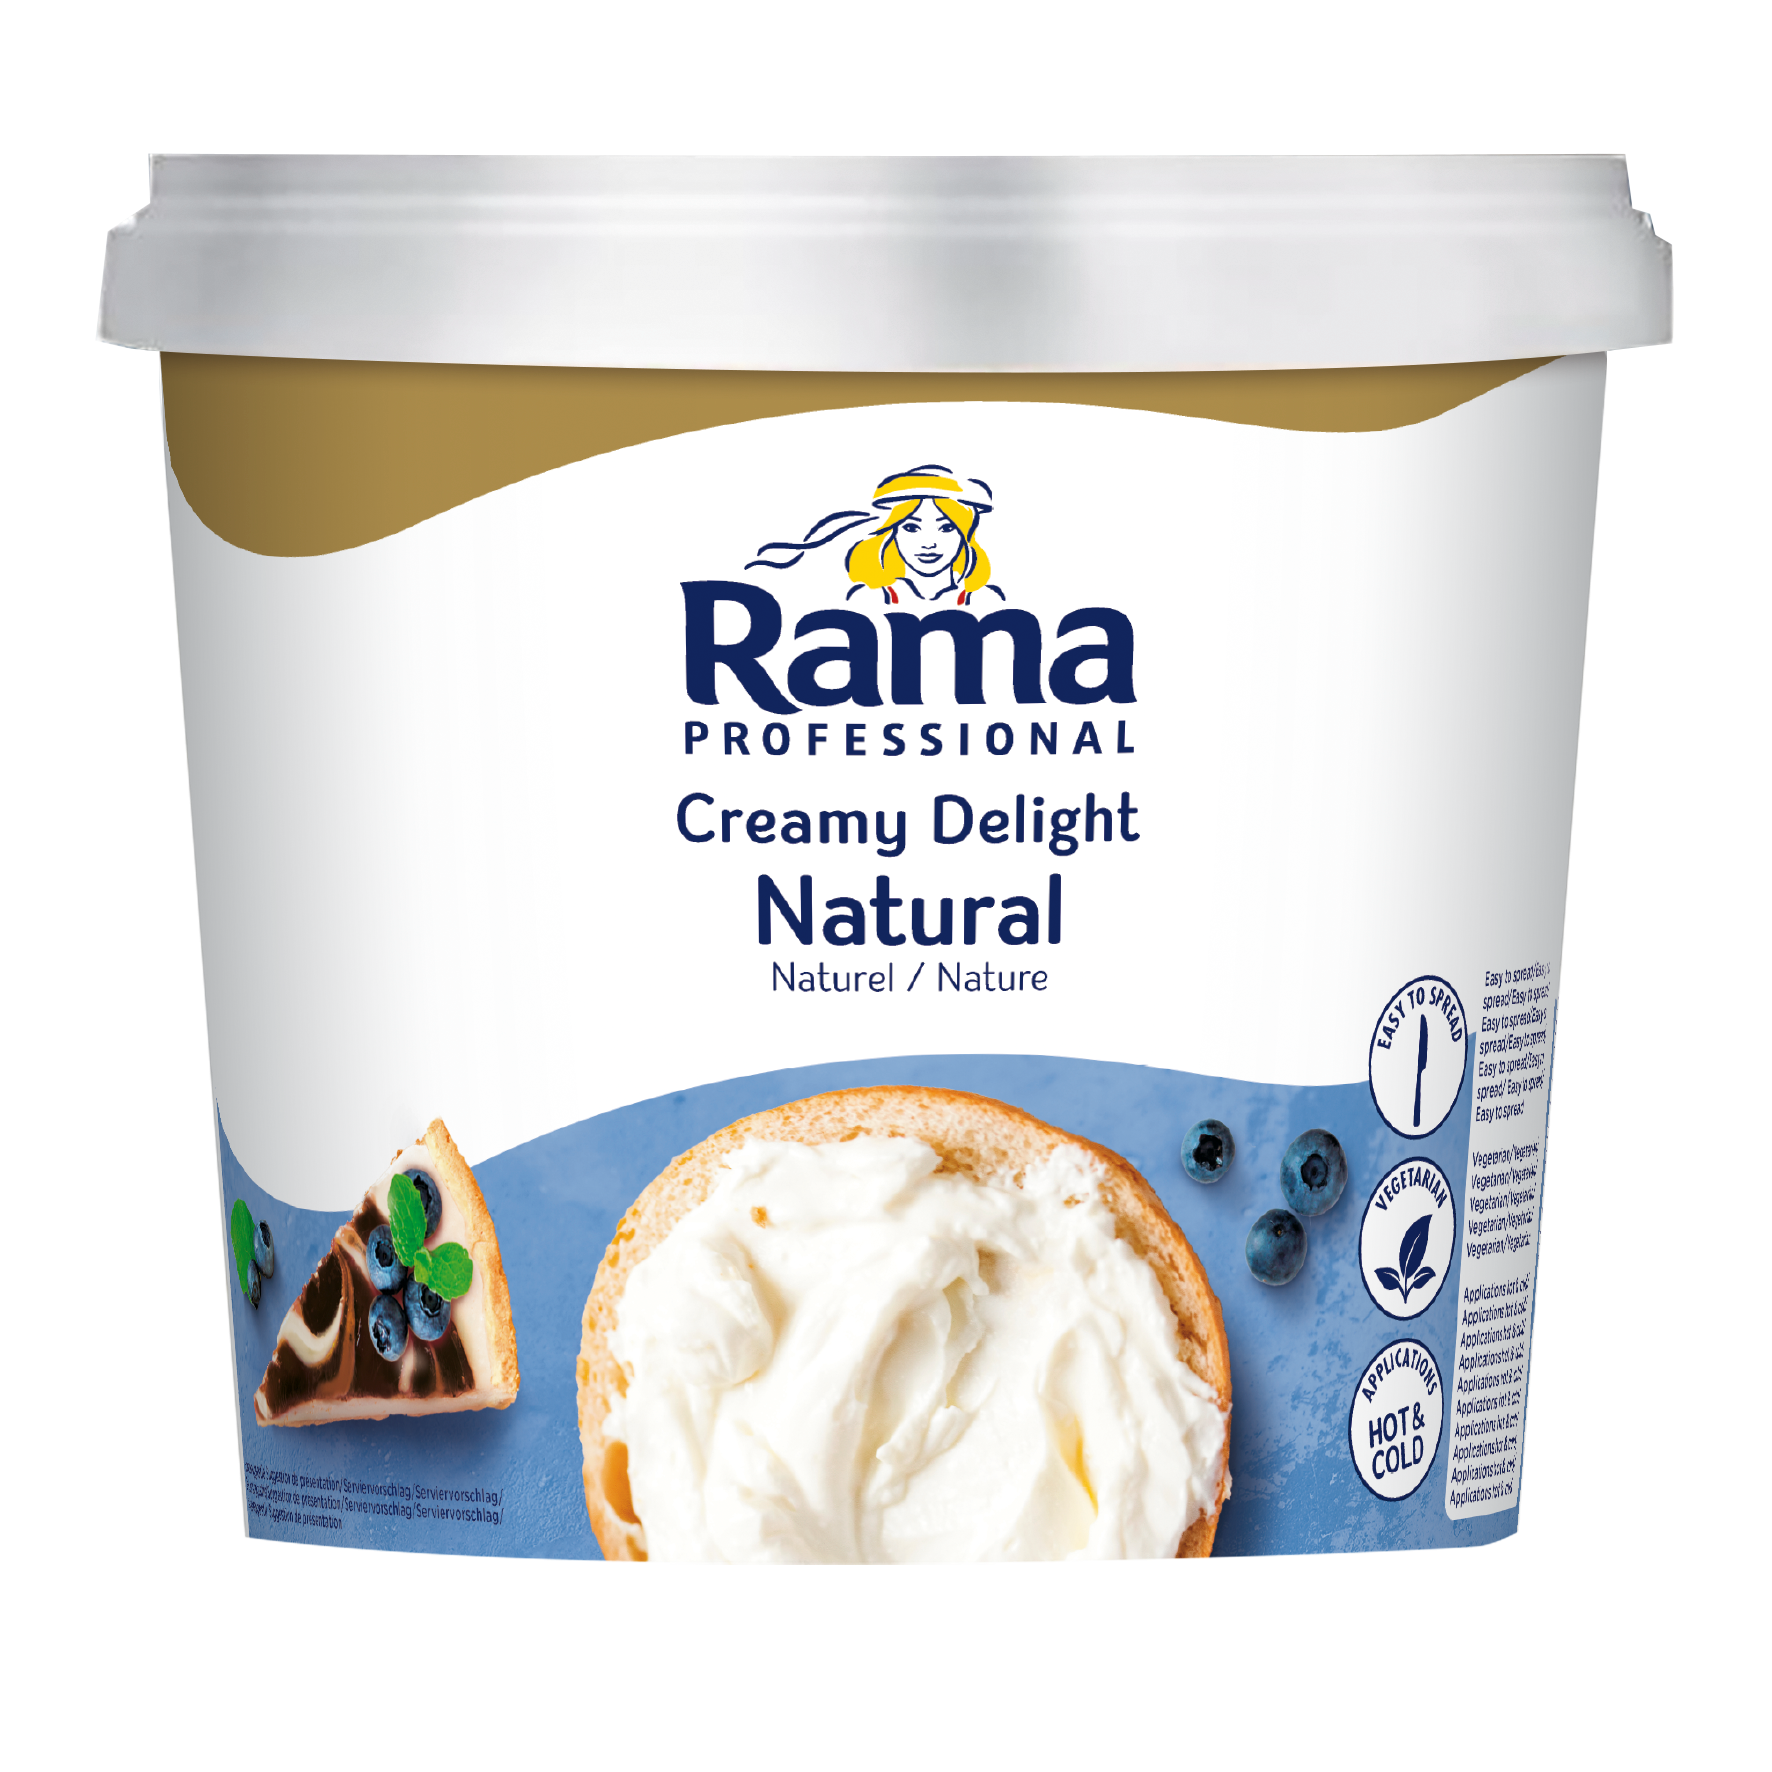 Rama Professional Creamy Delight natural 1.5kg